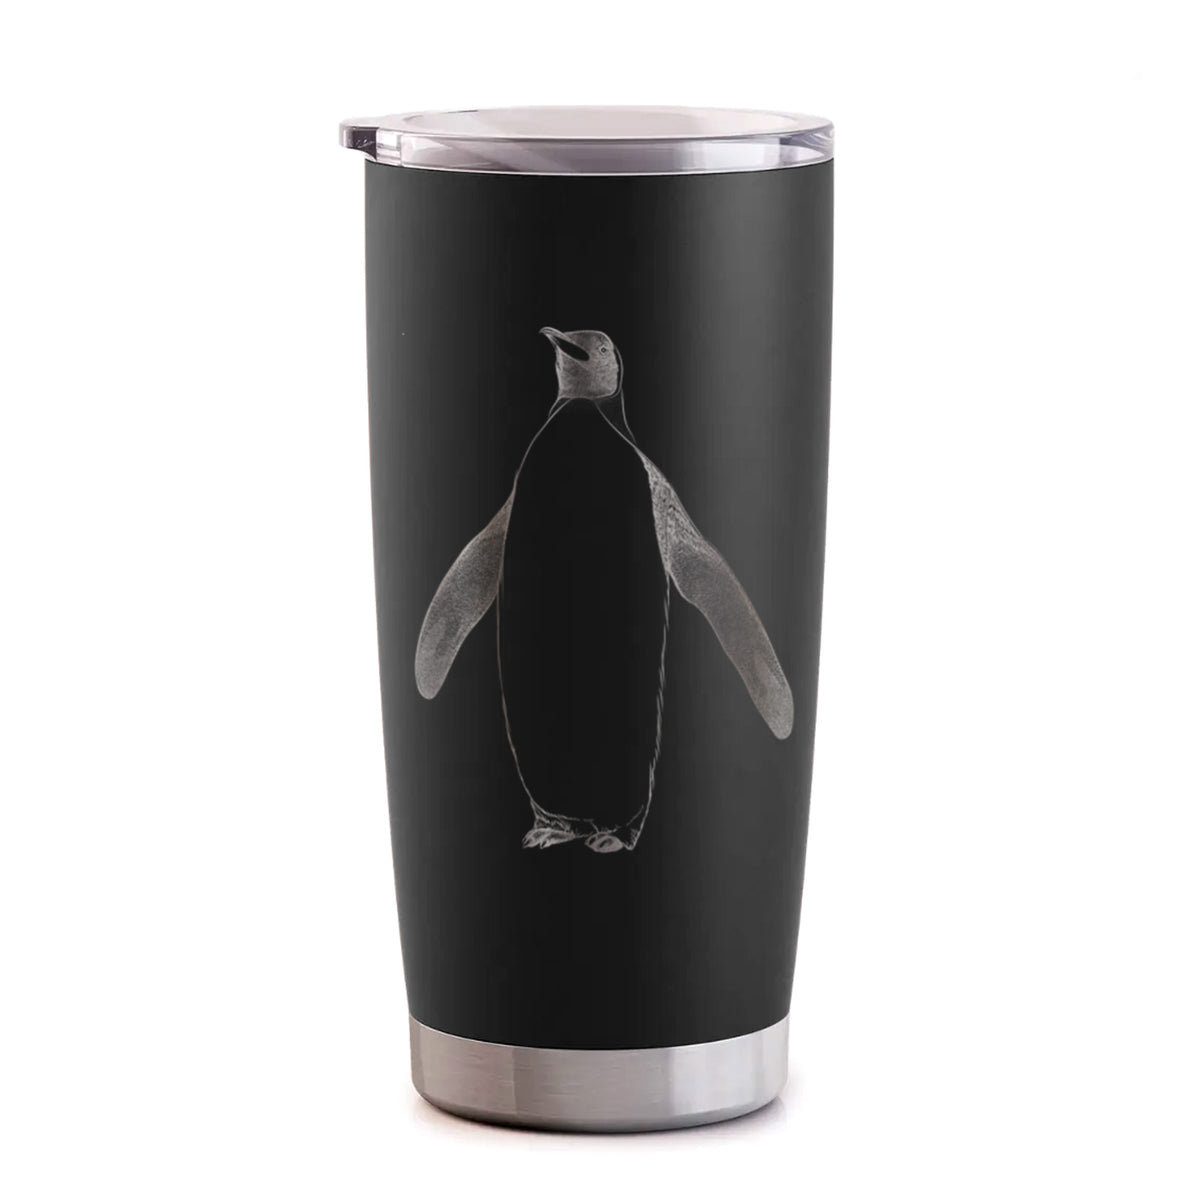 Emperor Penguin - Aptenodytes forsteri - 20oz Polar Insulated Tumbler